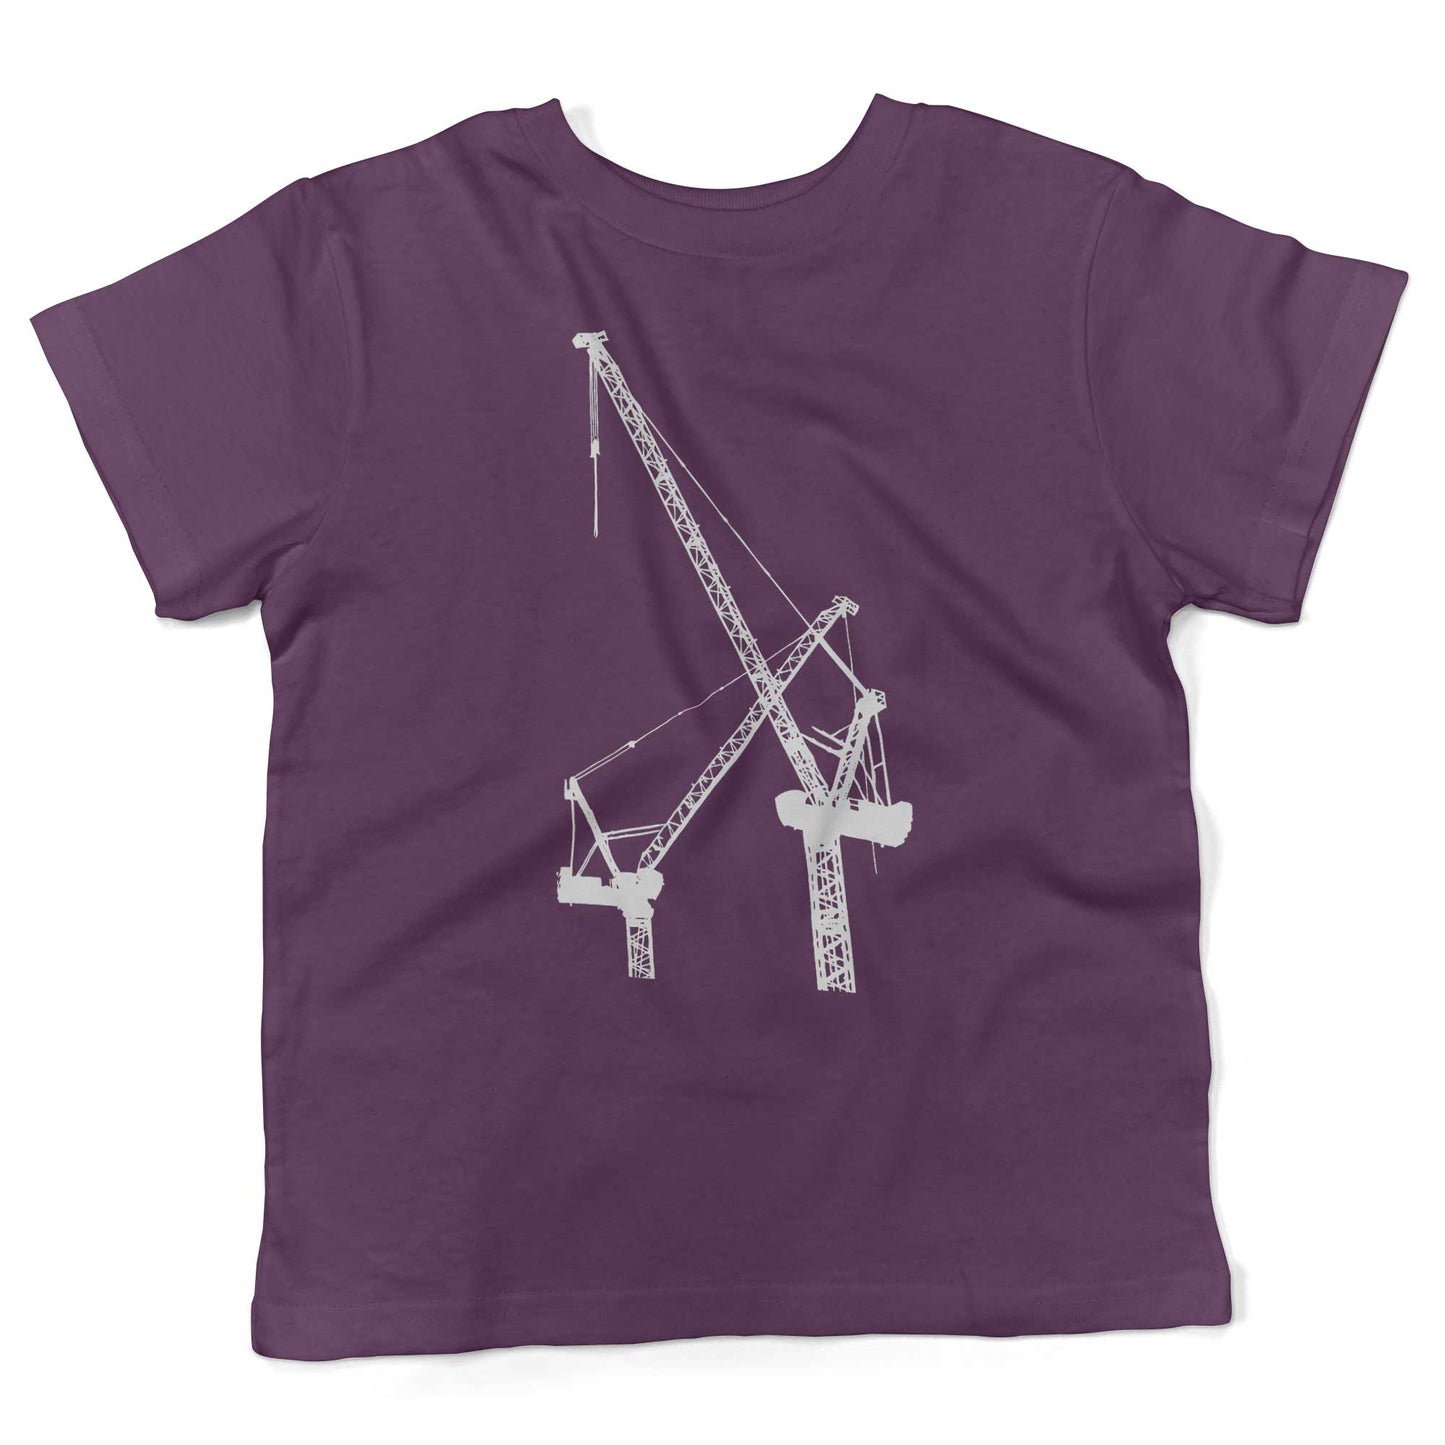 Construction Cranes Toddler Shirt-Organic Purple-2T